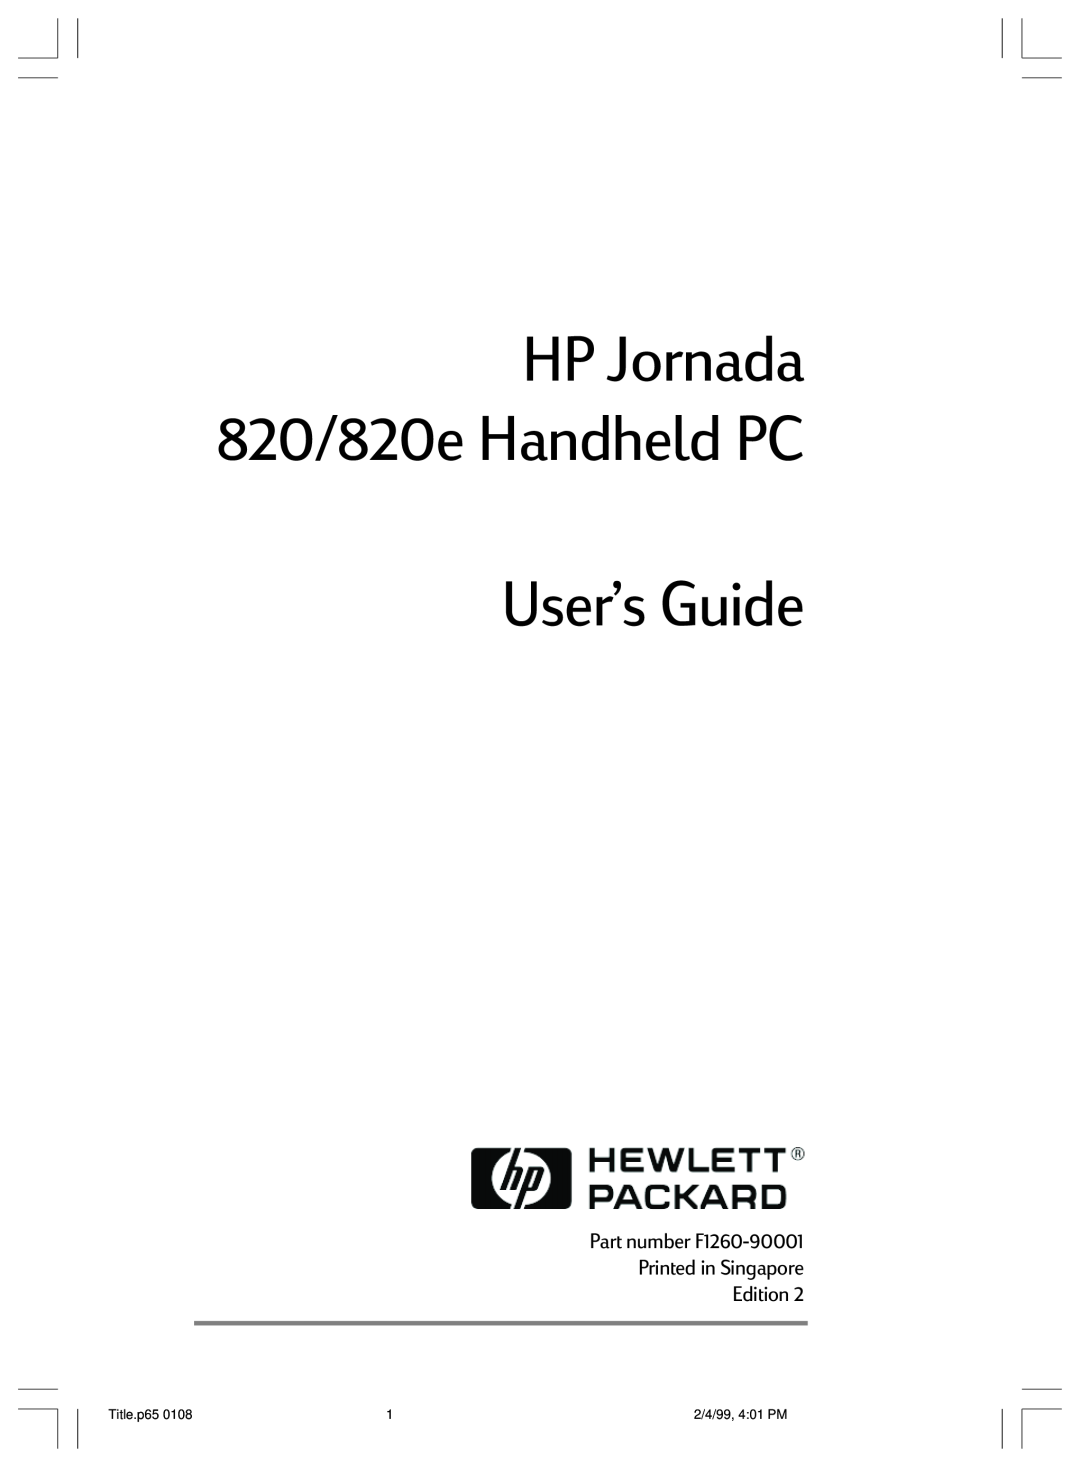 HP 820 E manual UserÕs Guide, HP Jornada 820/820e Handheld PC, Part number F1260-90001 Printed in Singapore Edition 